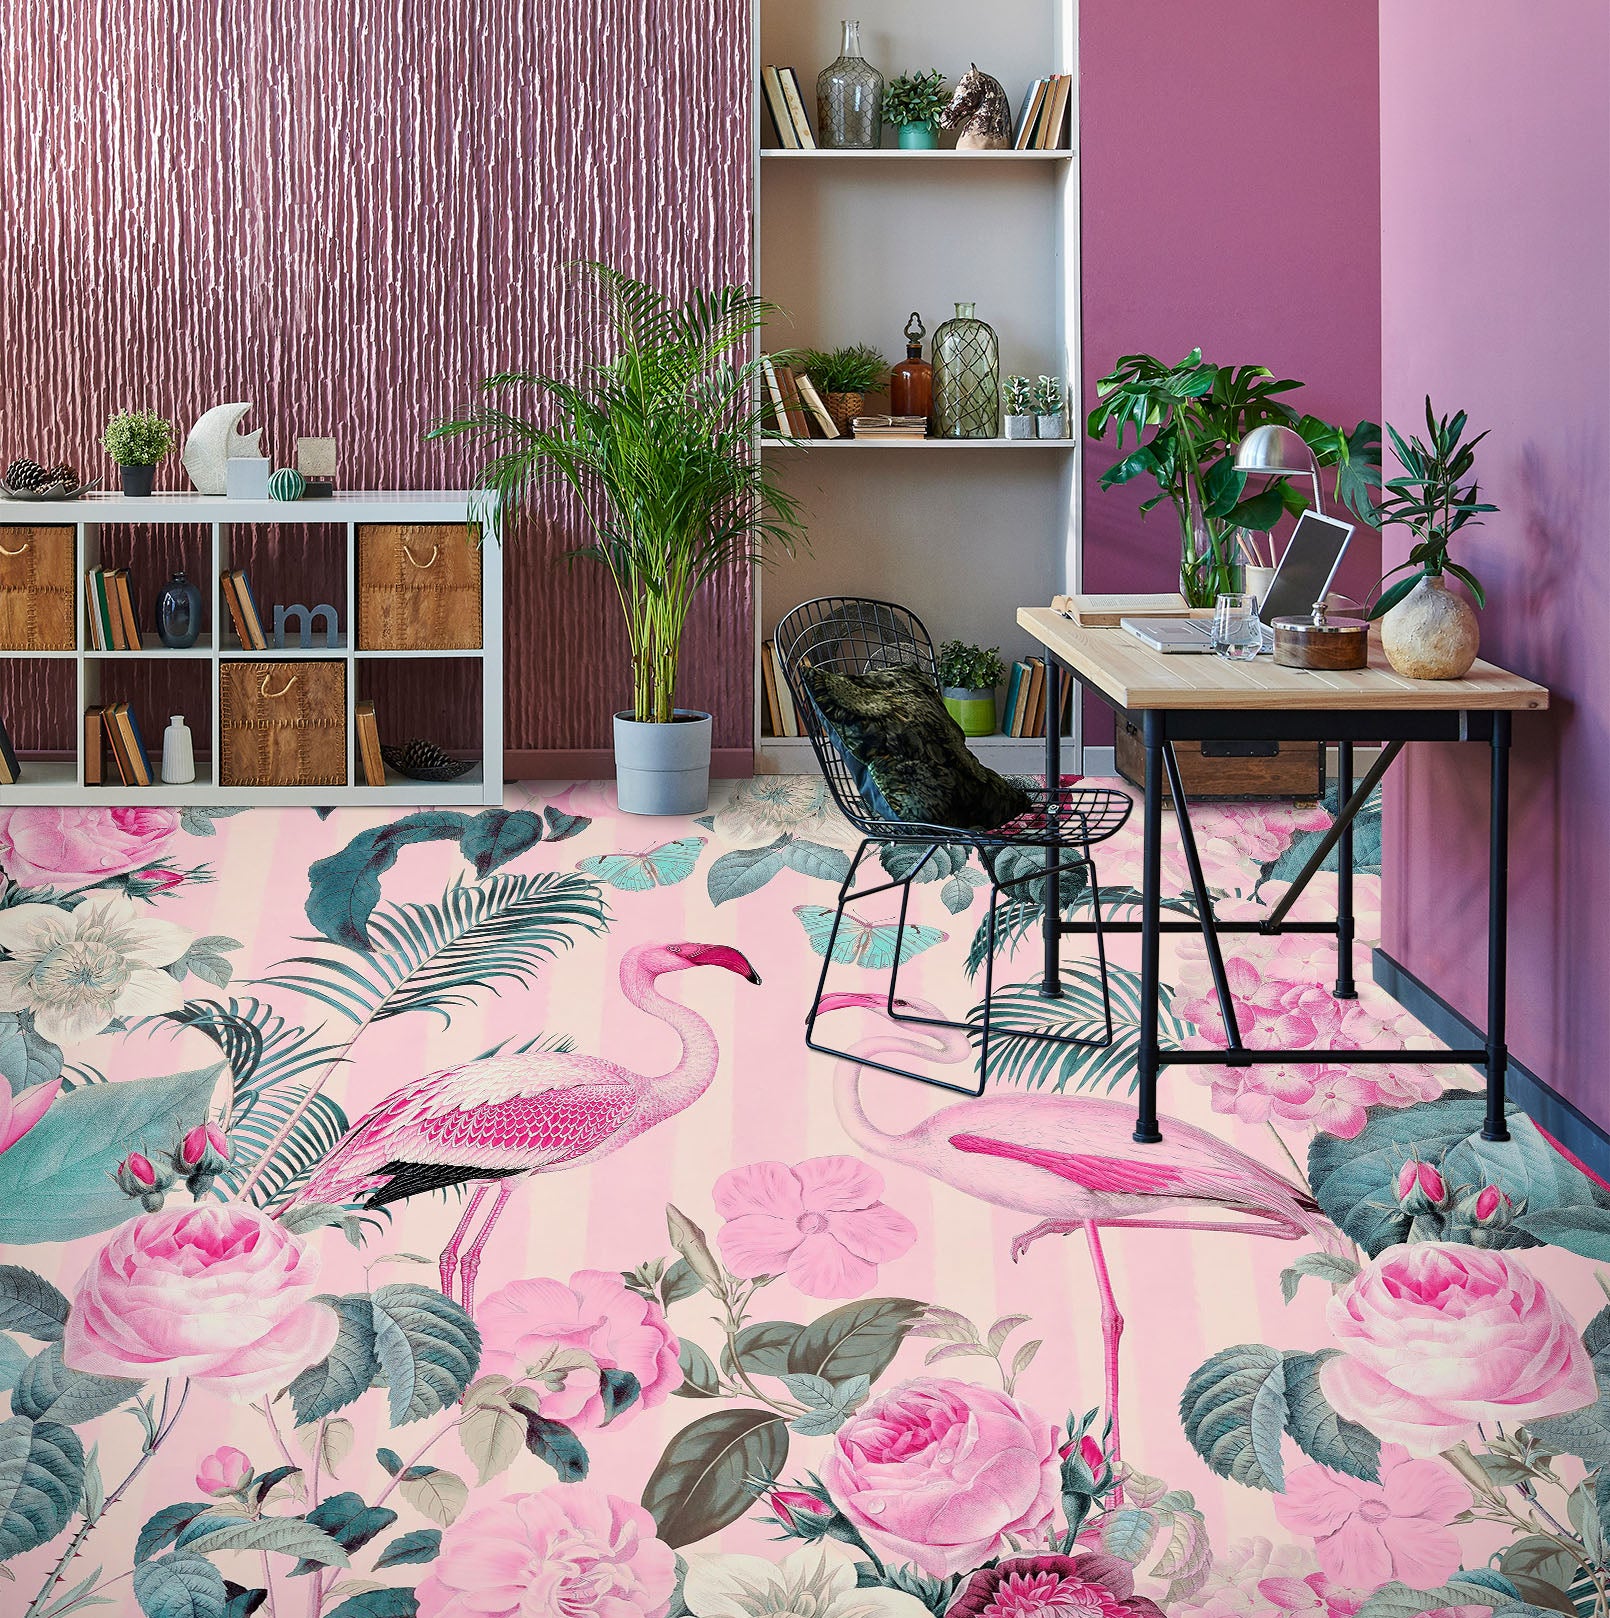 3D Pink Rose Flamingo 104146 Andrea Haase Floor Mural  Wallpaper Murals Self-Adhesive Removable Print Epoxy